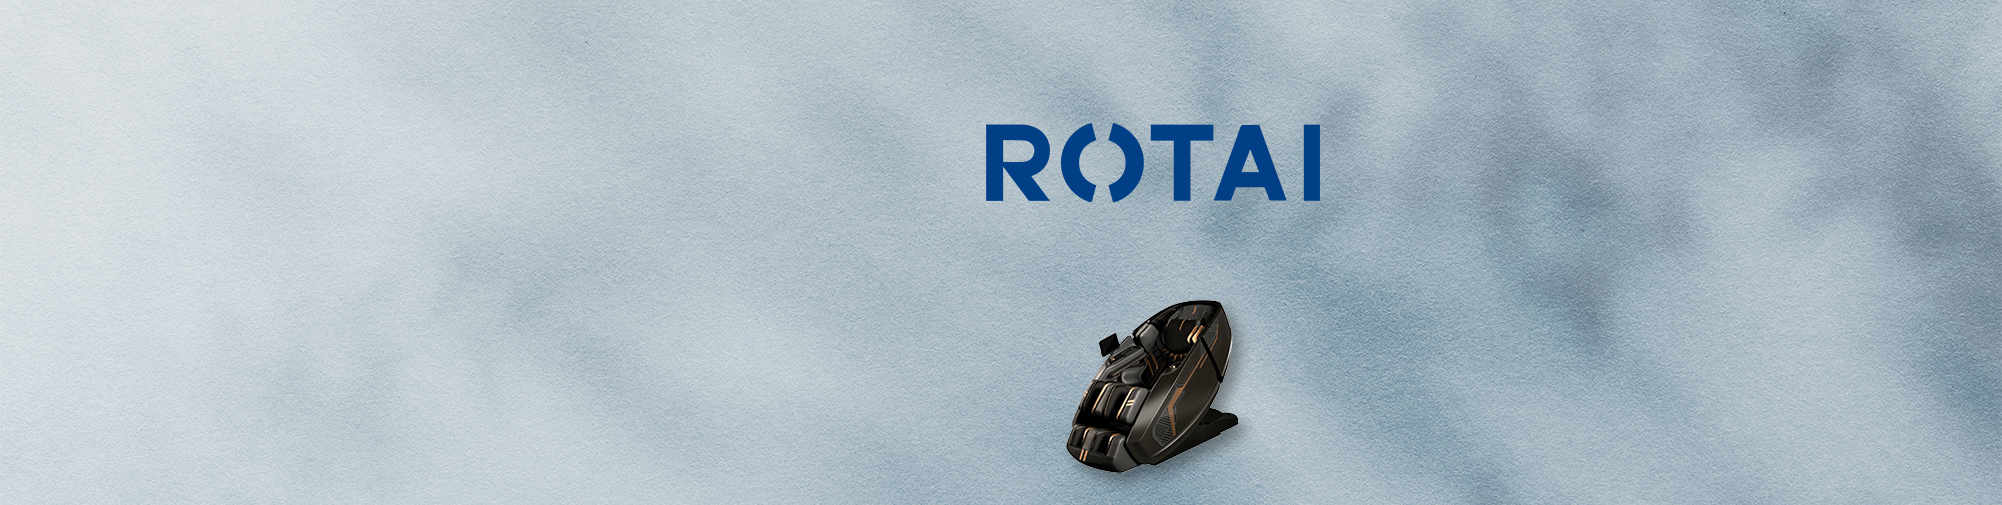 ROTAI | Fauteuils de massage monde